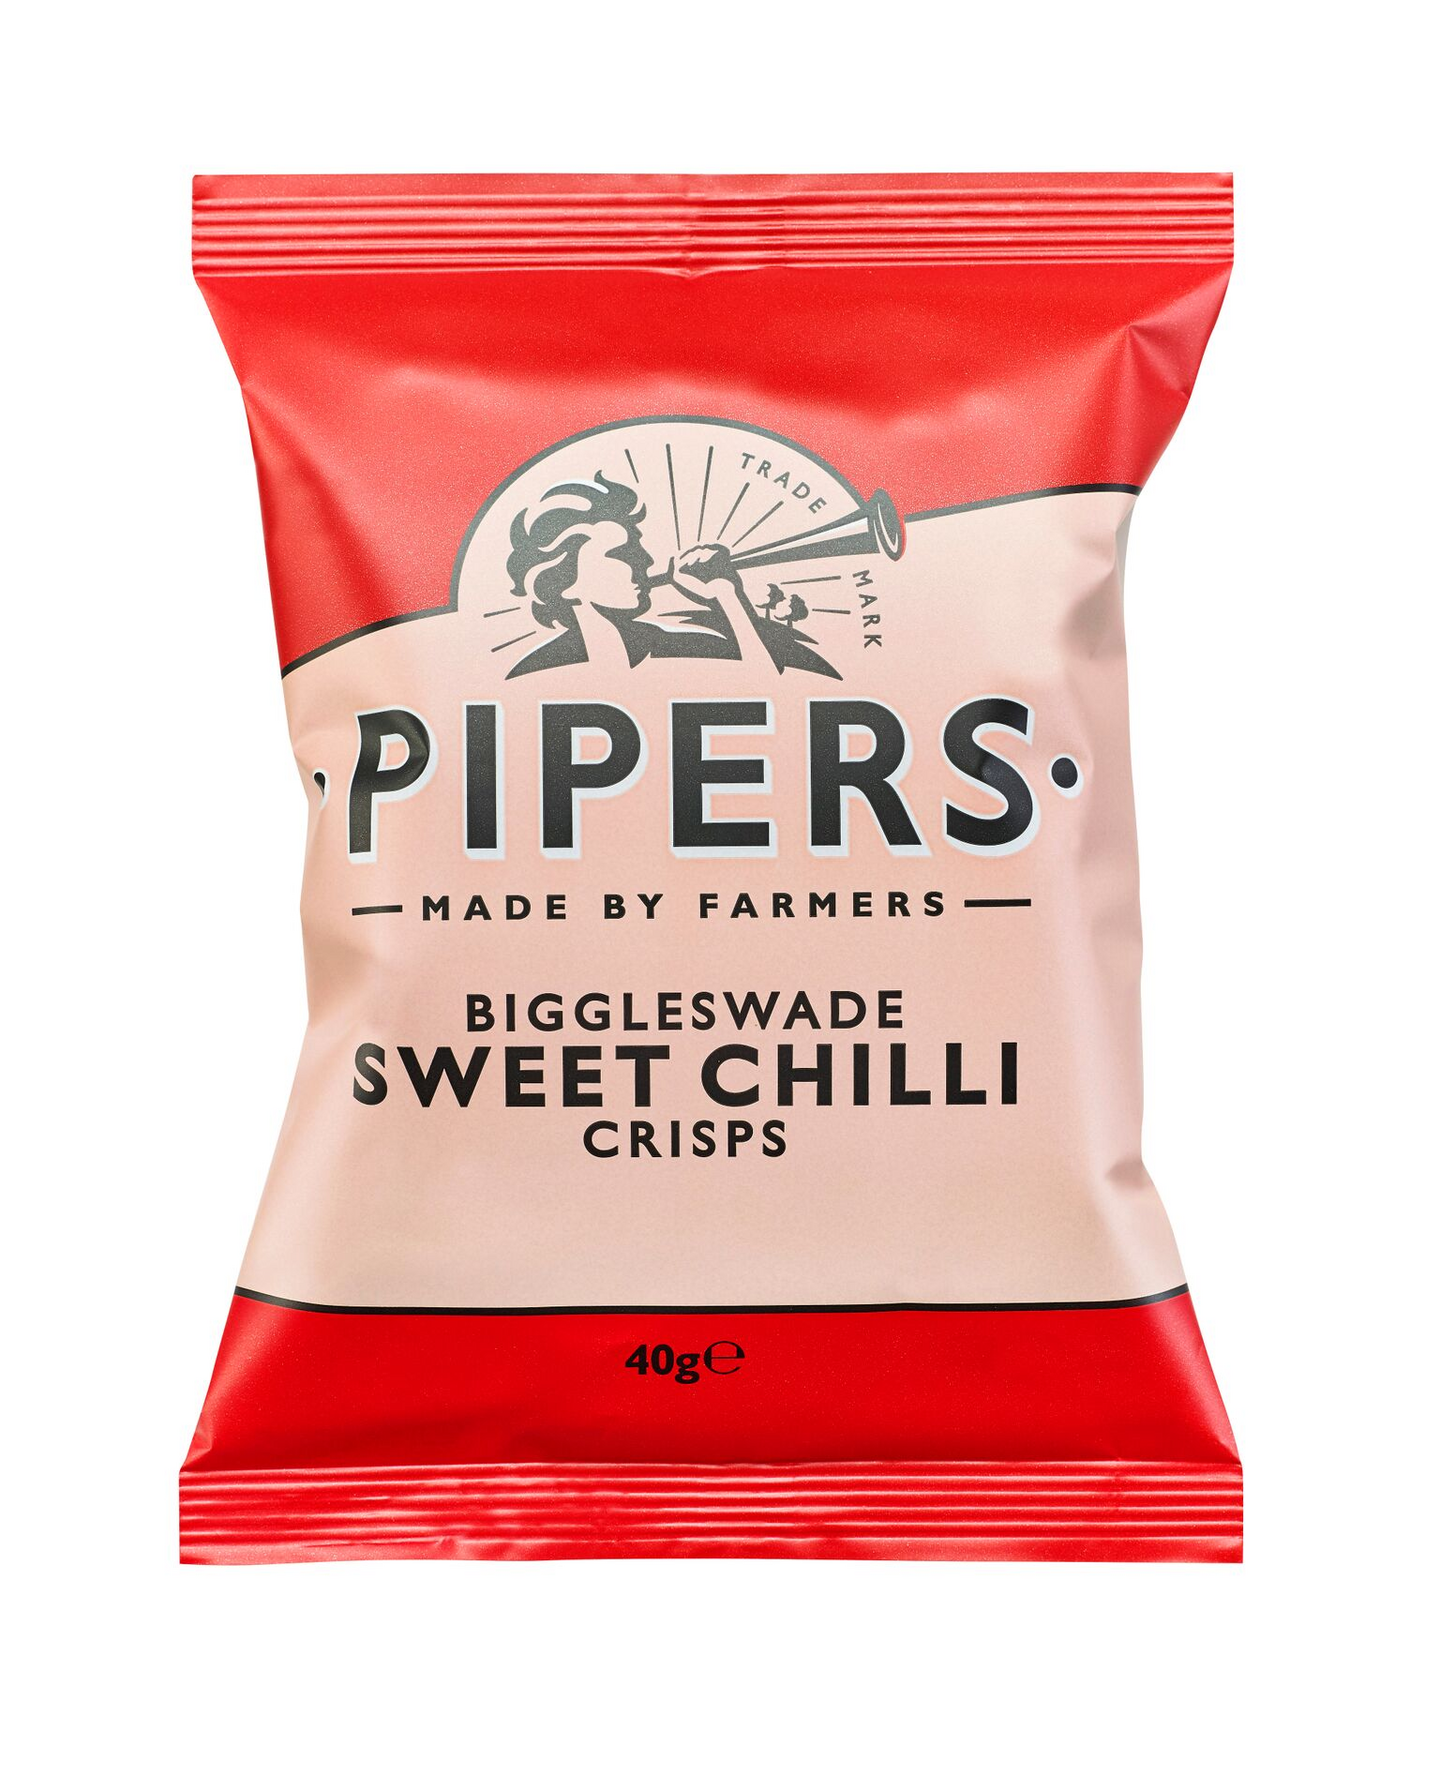 Pipers Crisp Biggleswade Sweet Chilli 40 g